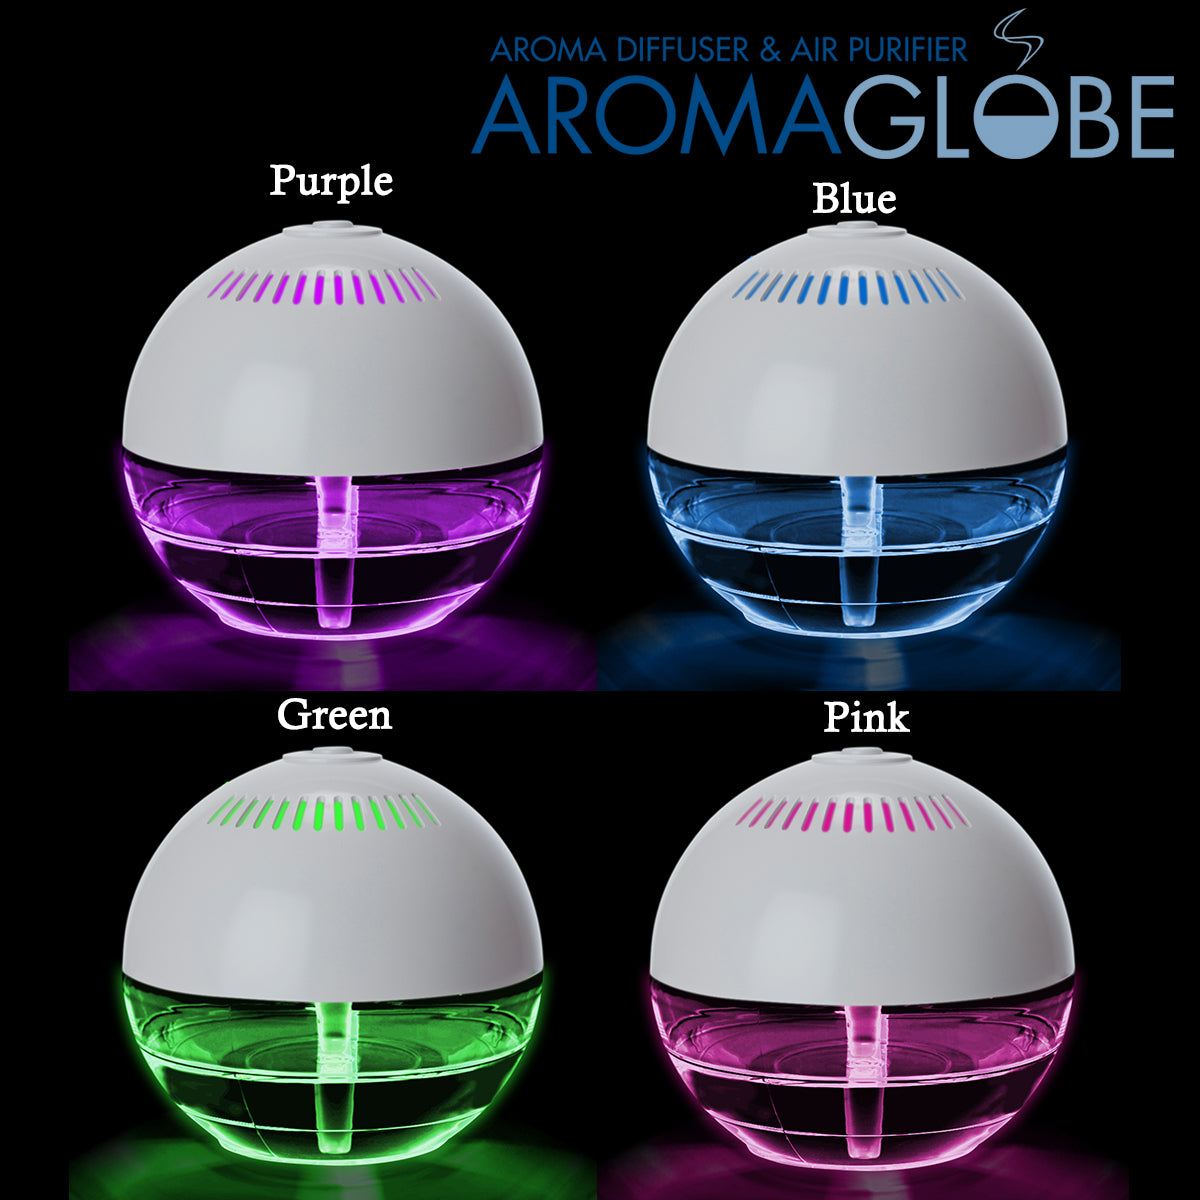 Aroma Globe Air Washer & Room Revitalizer - White Noise Machine USJ-802